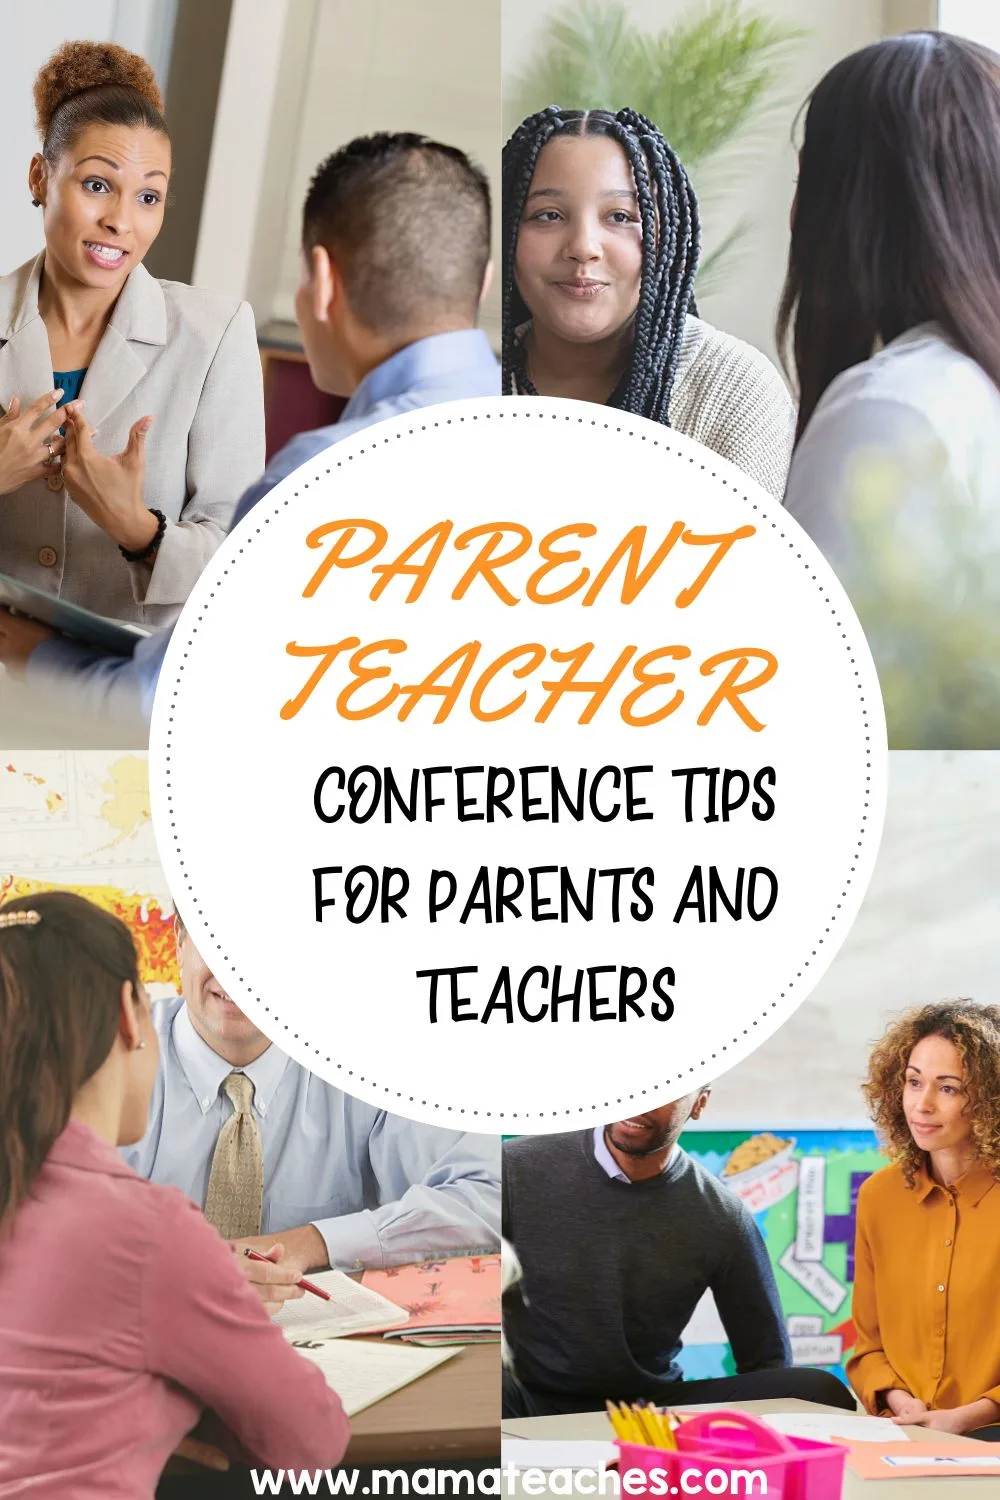 Parent Teacher Conference Tips for Parents and Teachers